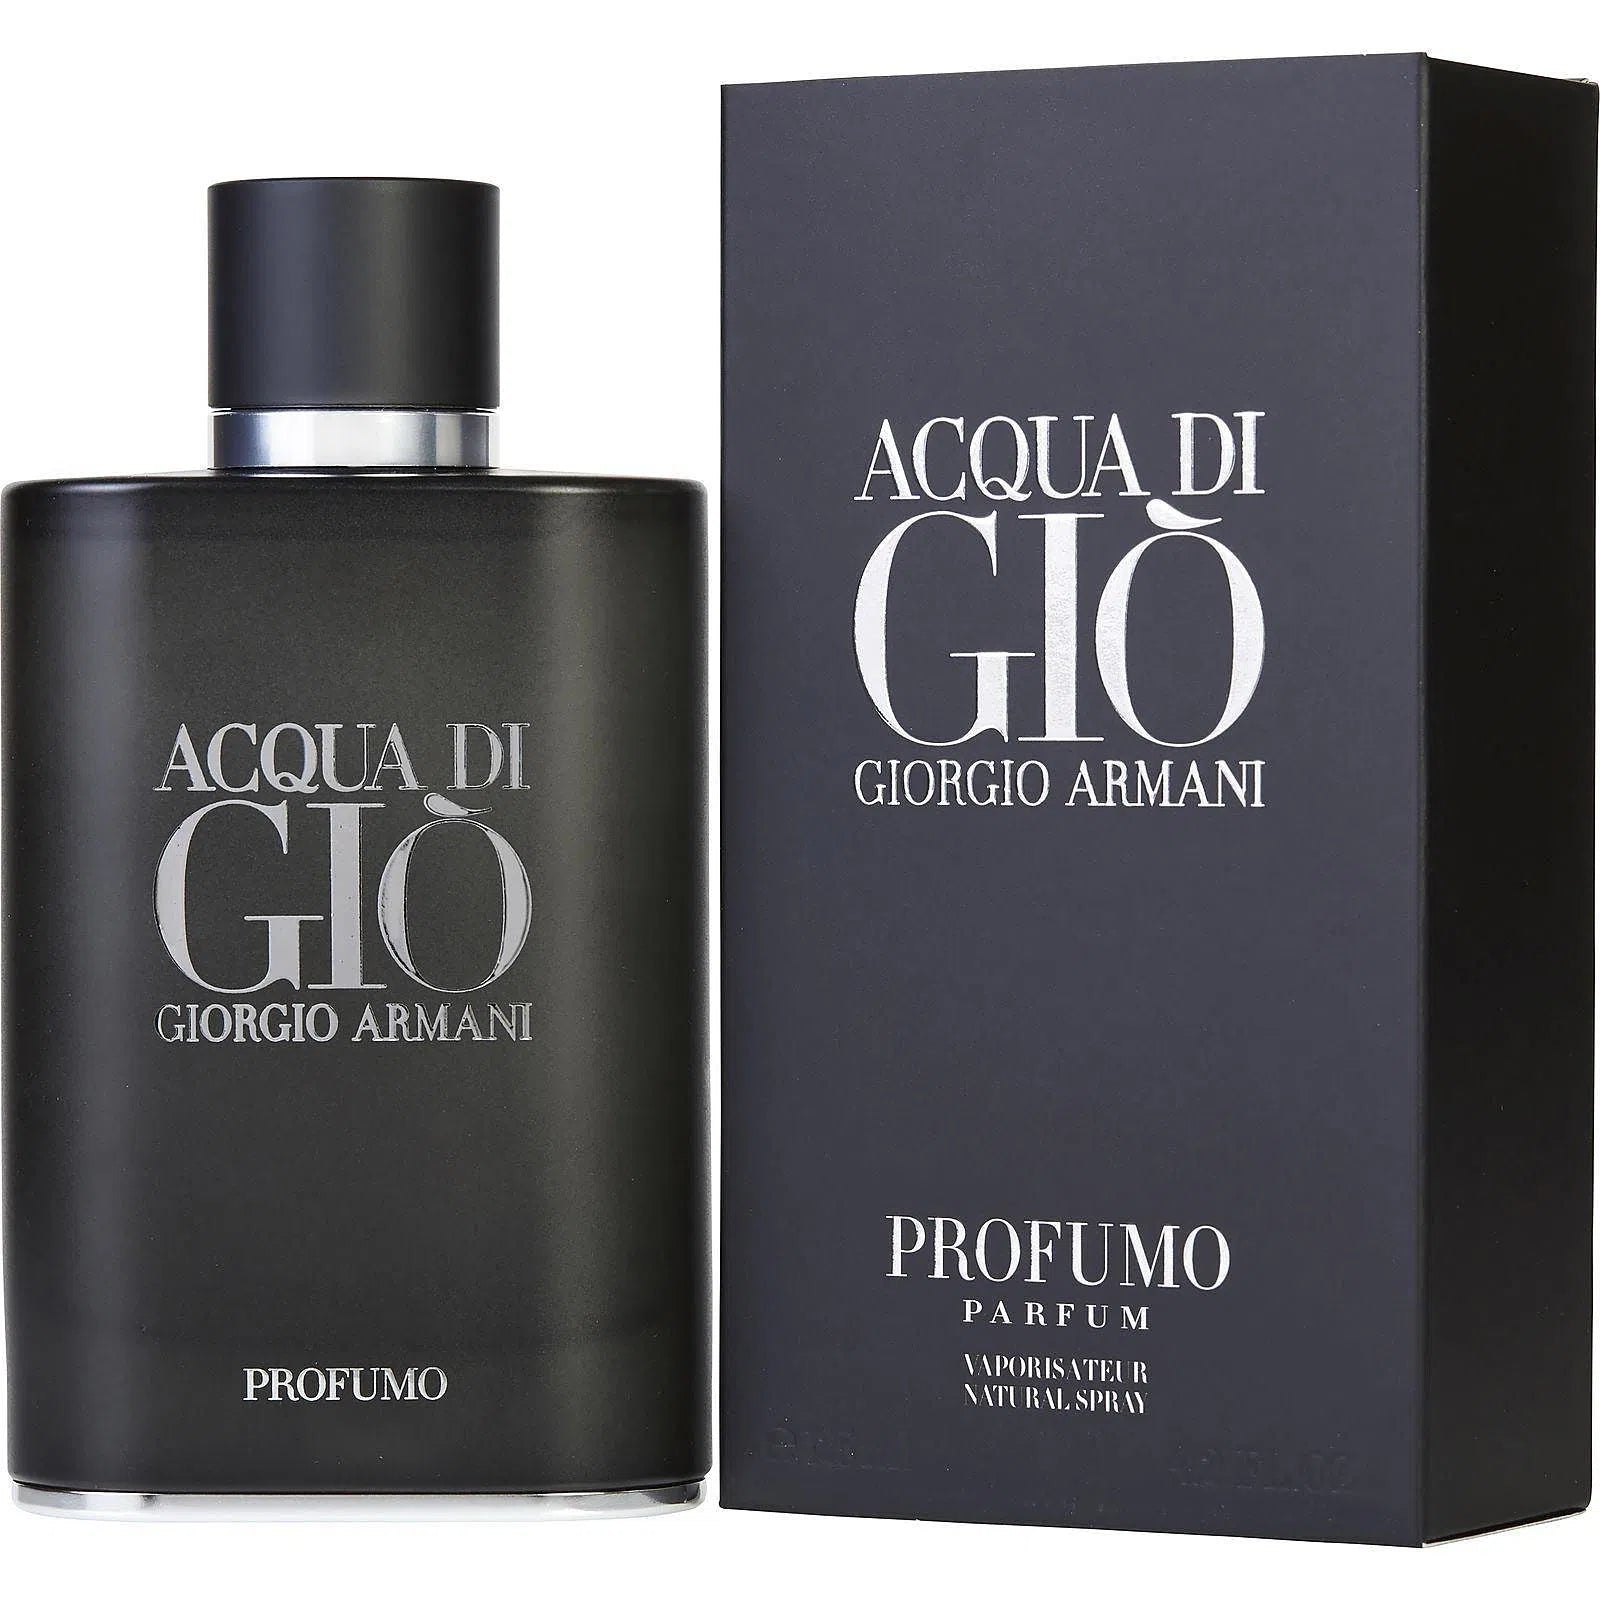 Perfume Giorgio Armani Acqua Di Gio Profumo Parfum (M) / 125 ml - 3614270254697- Prive Perfumes Honduras